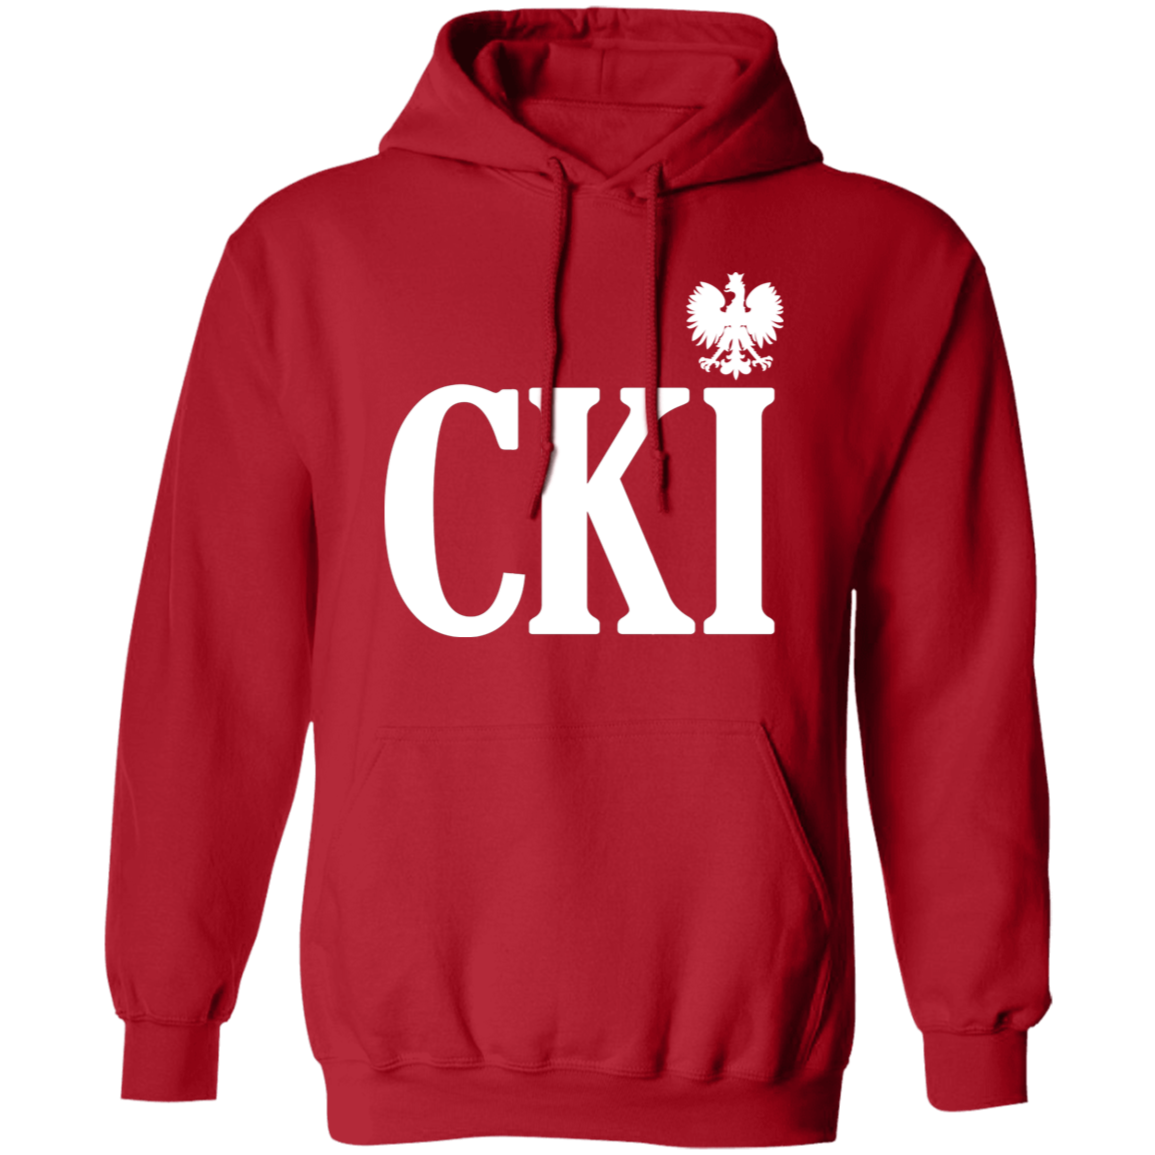 CKI Polish Surname Ending Apparel CustomCat G185 Pullover Hoodie Red S